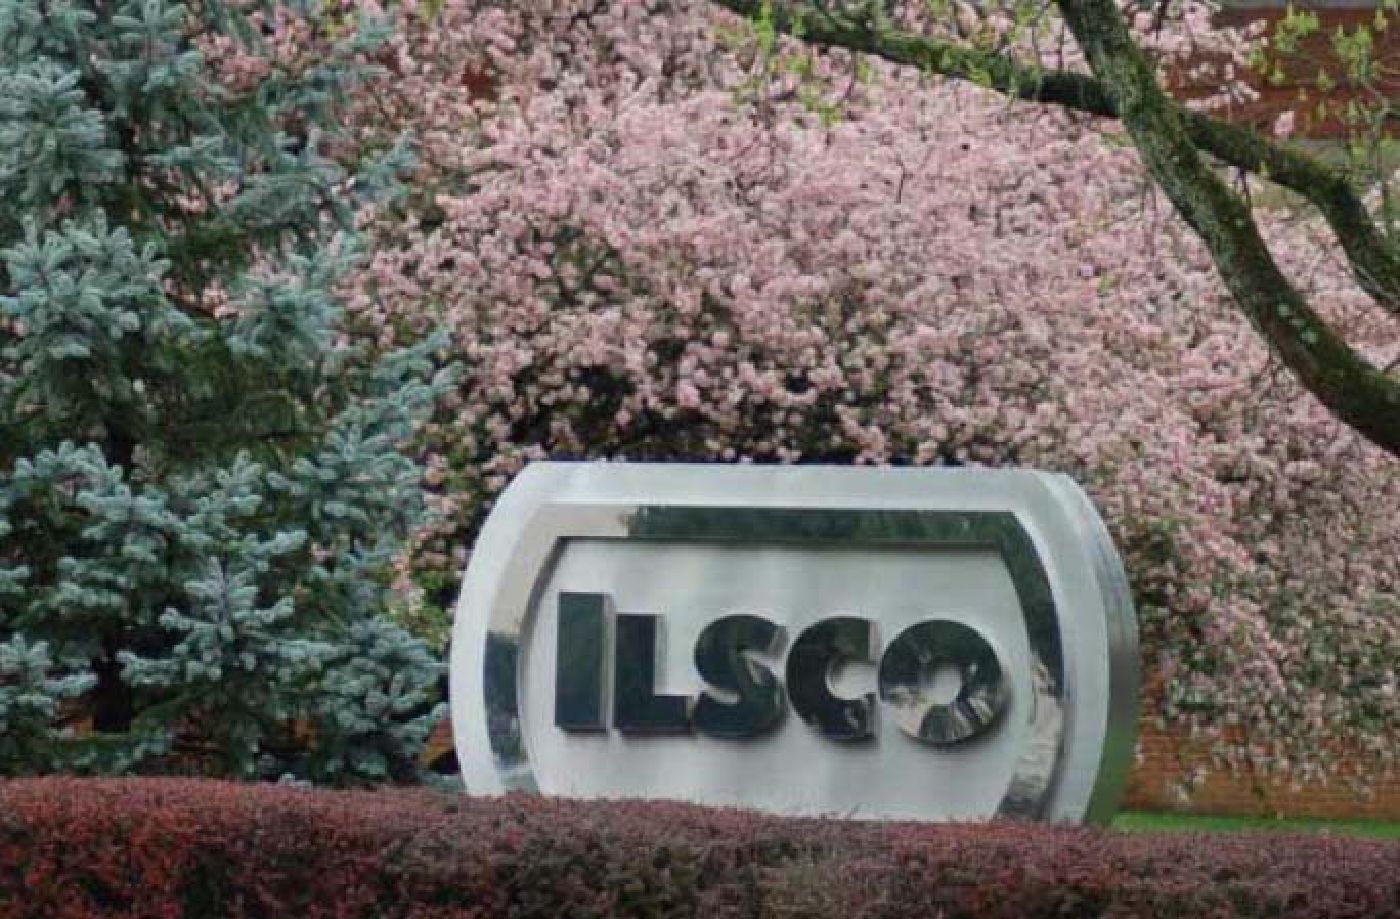 Picture of Ilsco Corporation's Signage